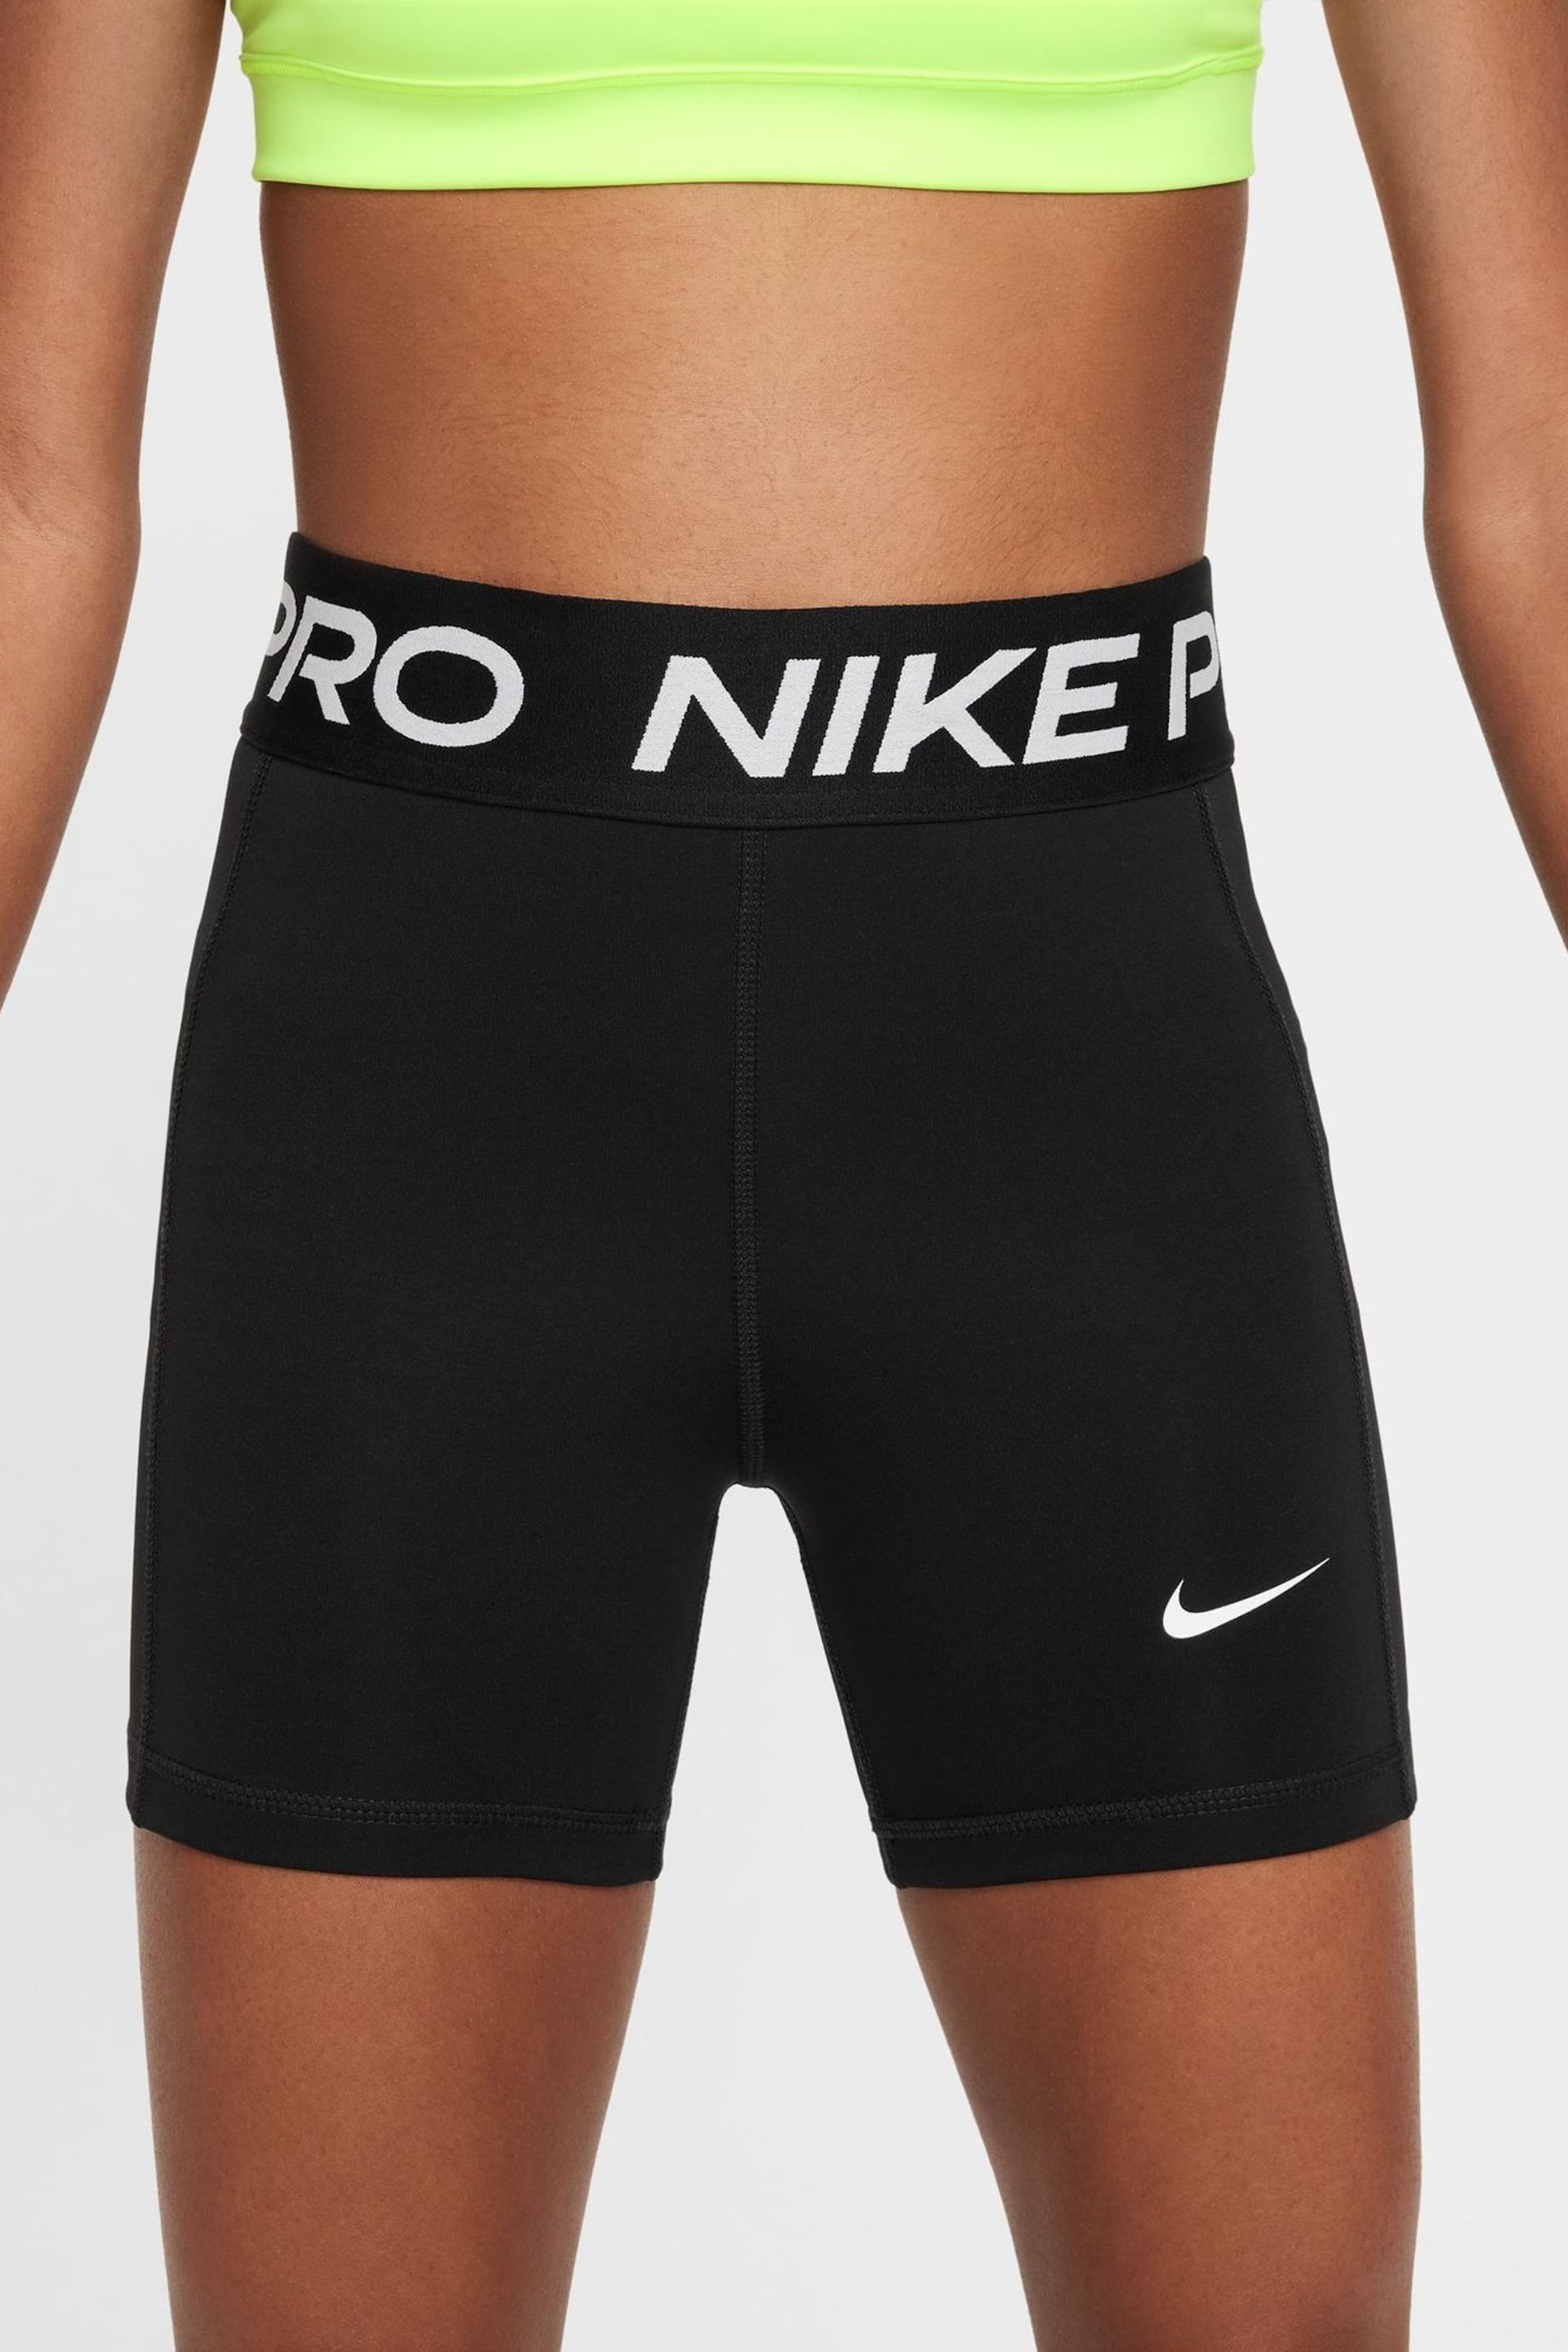 Nike Black Pro 3 Inch Period Leak Protection Shorts - Image 2 of 6